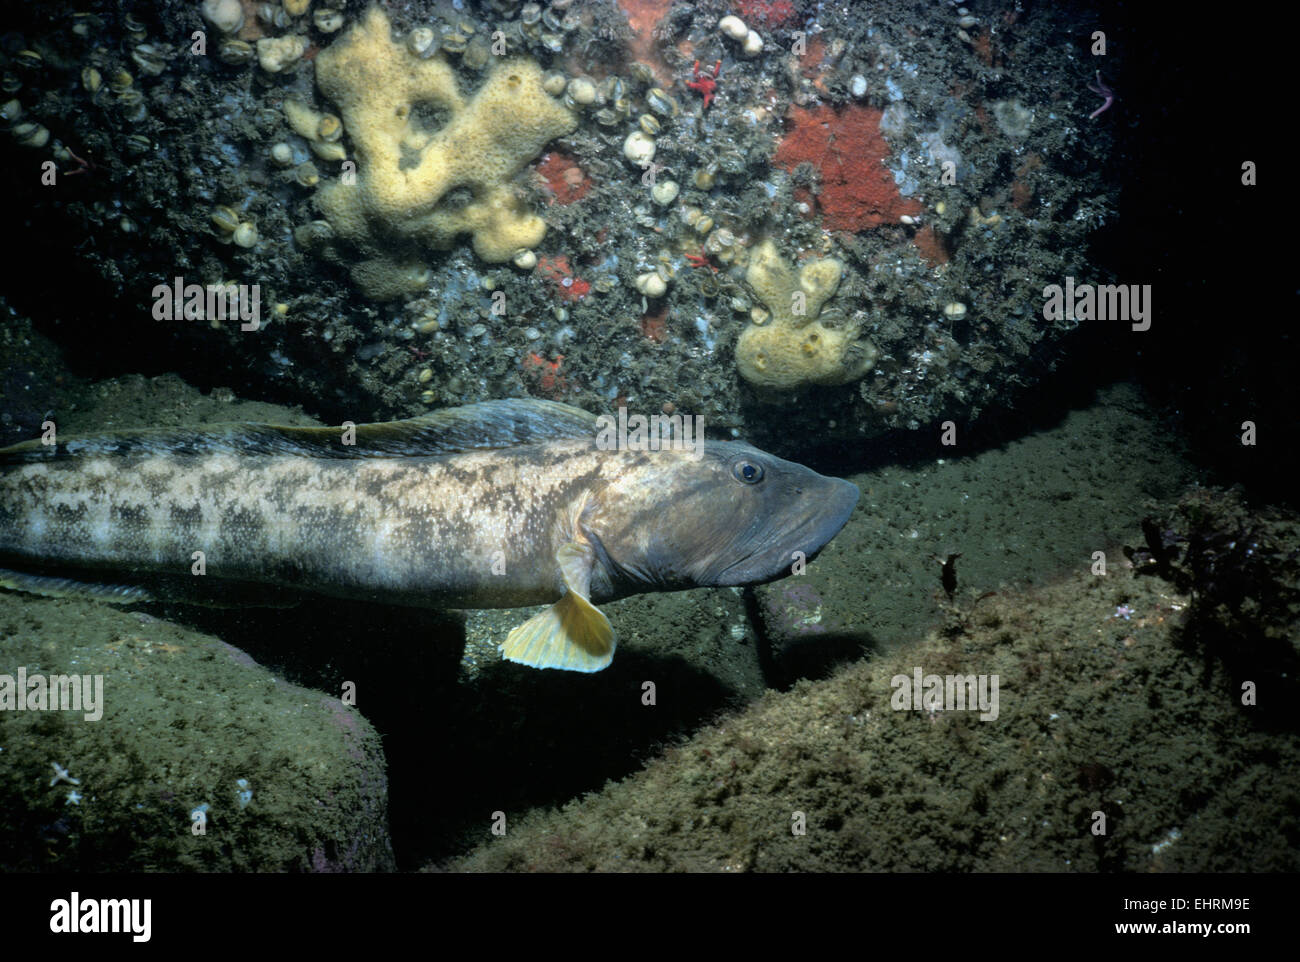 Ocean Pout (Macrozoarces americanus) on rocky bottom, New England - North Atlantic Ocean. Stock Photo